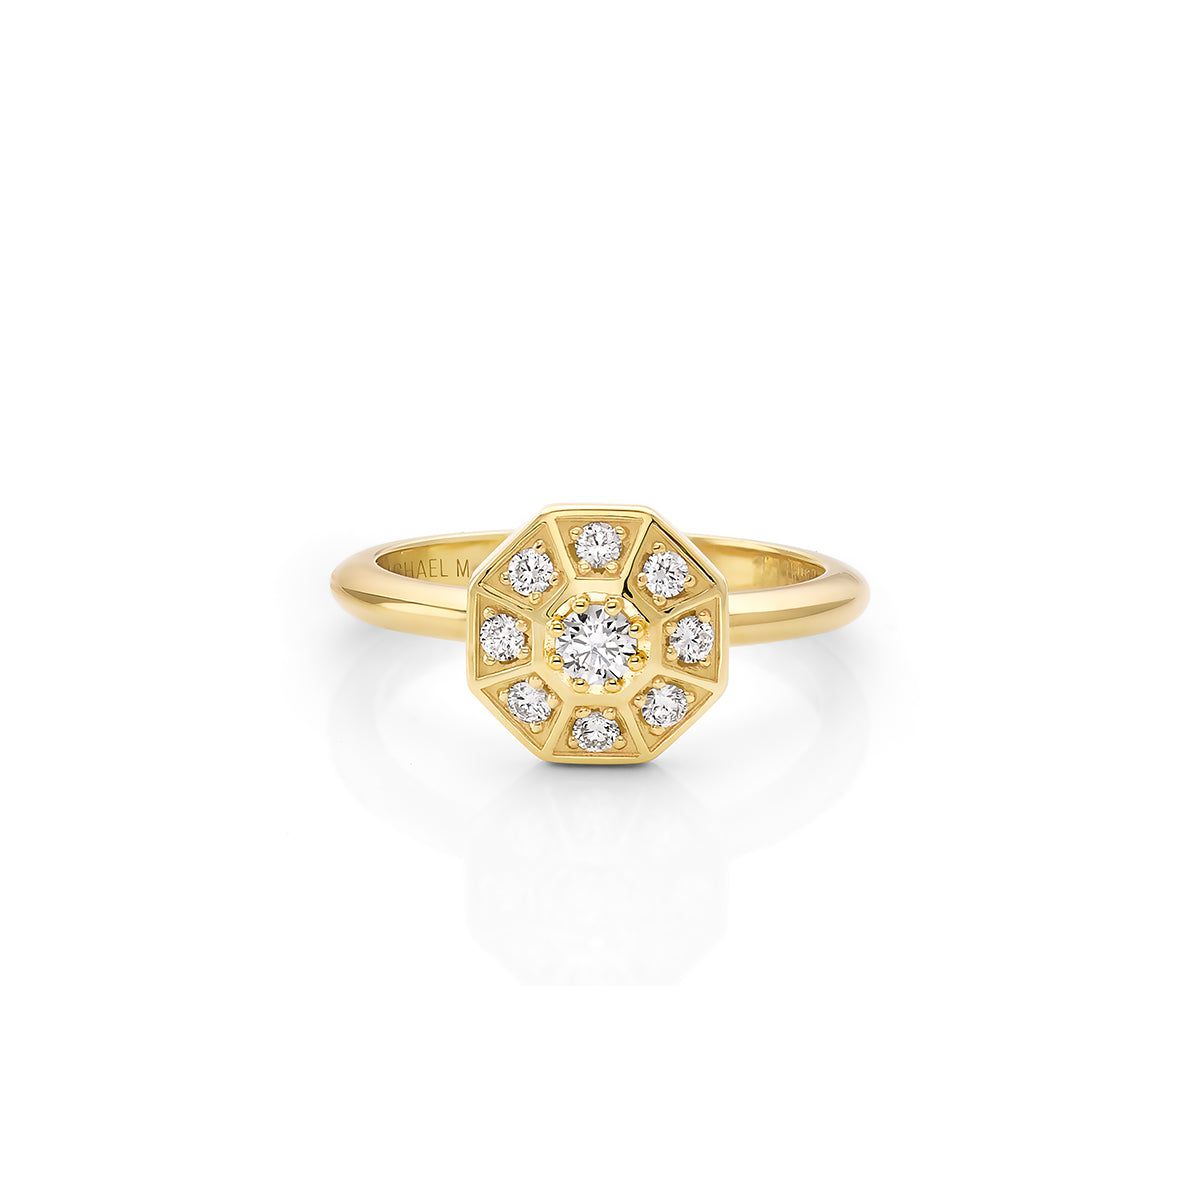 MICHAEL M Fashion Rings 14K Yellow Gold / 5 Octave Diamond Ring